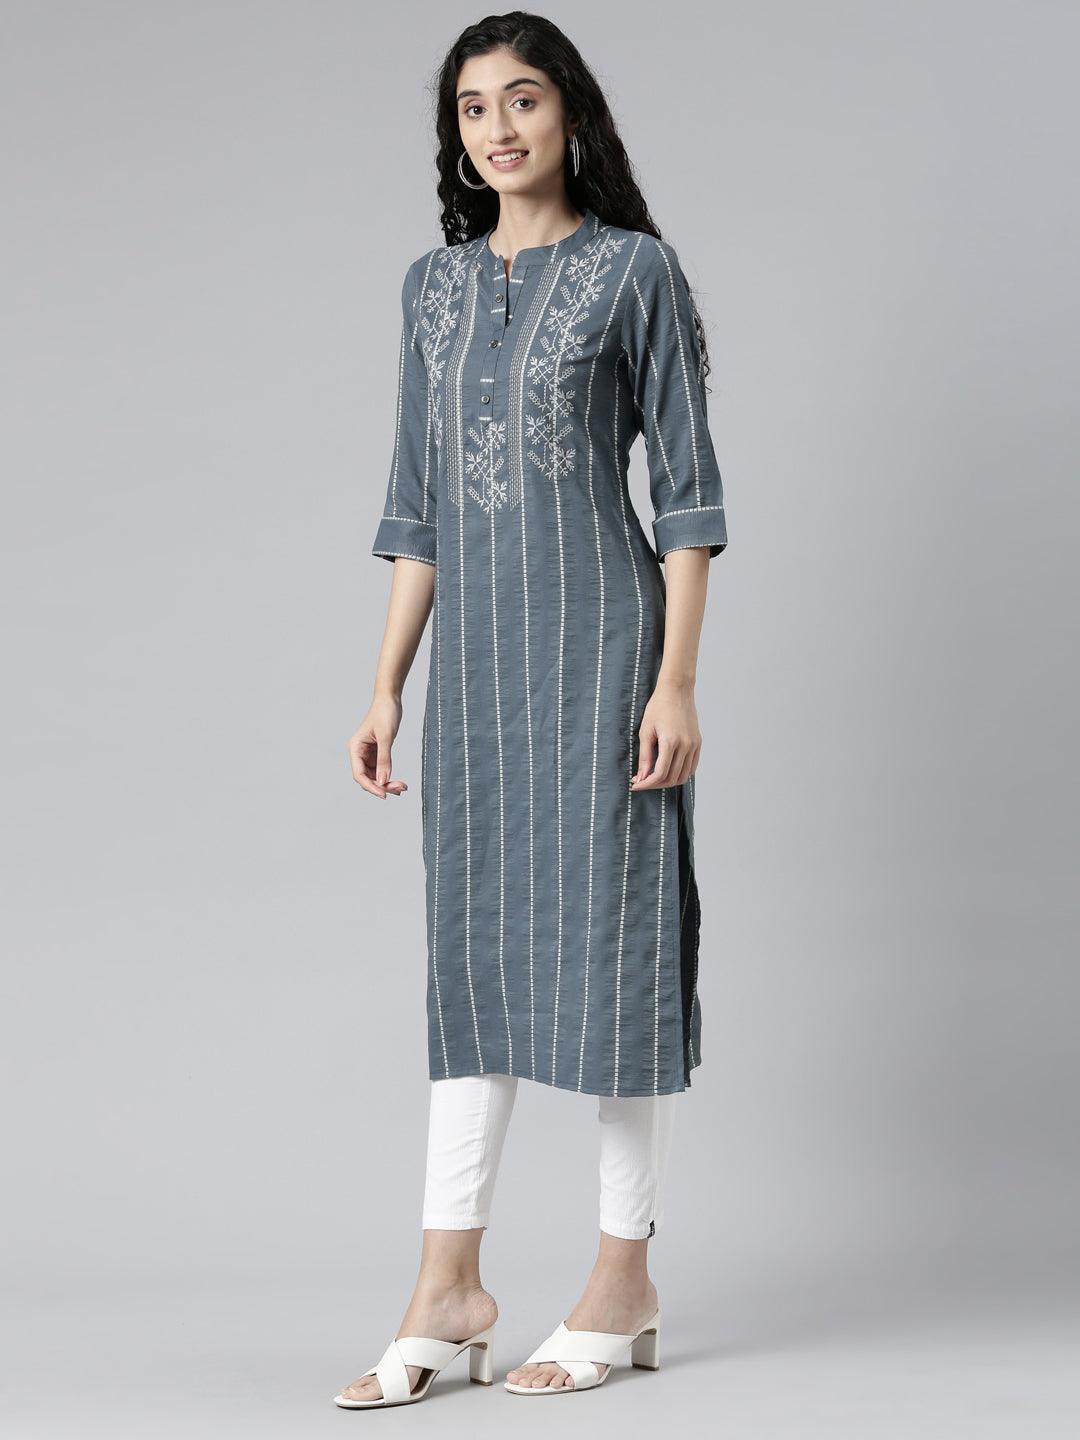 Black and White Stripes Crepe Kurti - Kurtis Online in India | Kurti designs,  Long kurti designs, Cotton kurti designs